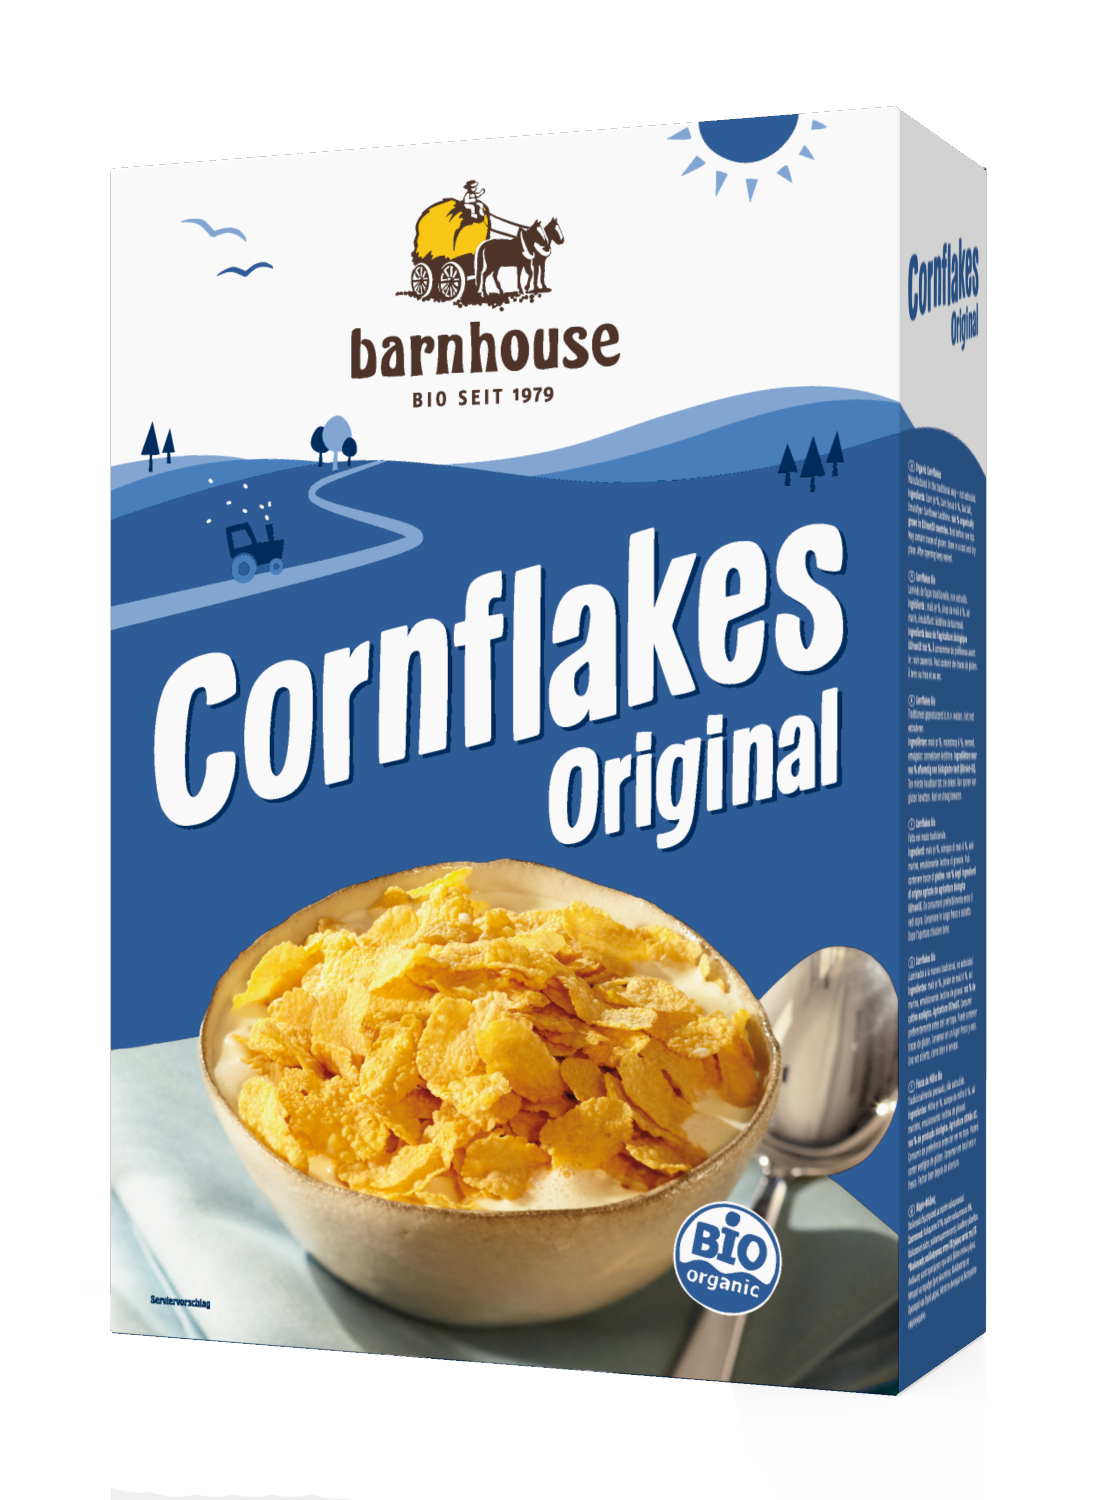 Barnhouse  Cornflakes Original 10 x 375g